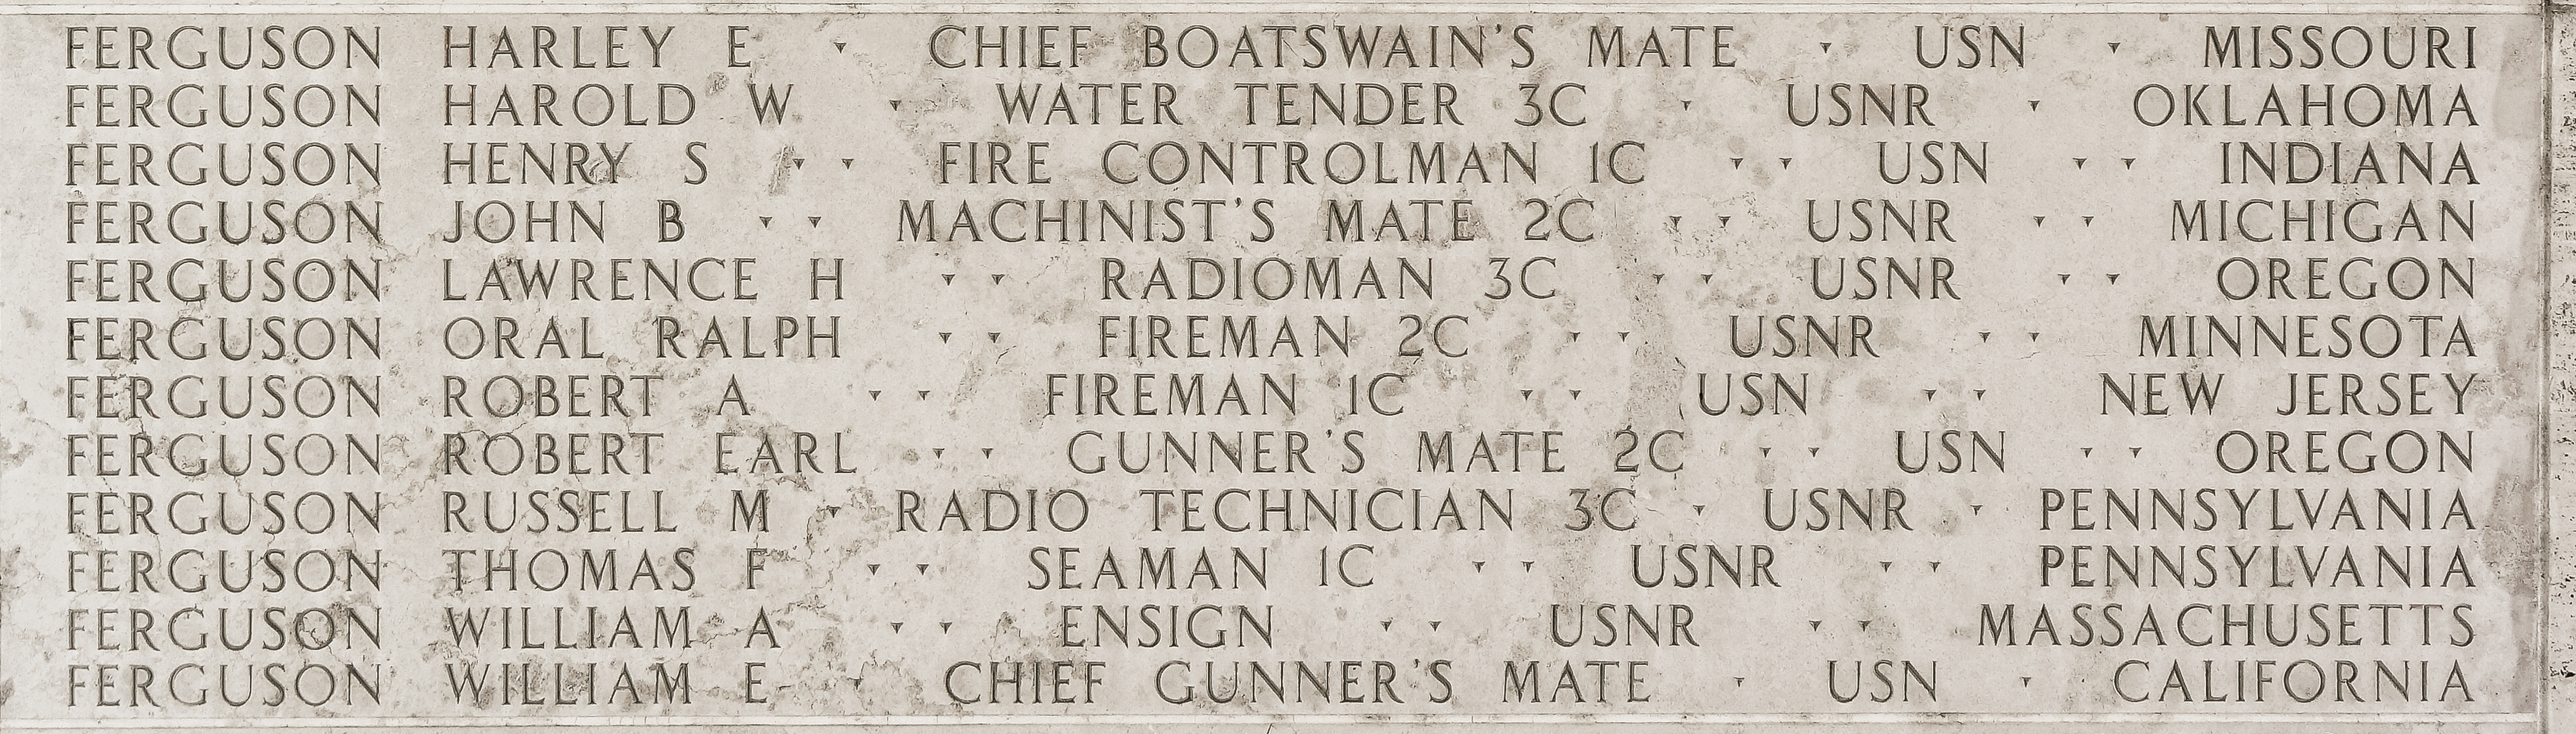 William E. Ferguson, Chief Gunner's Mate